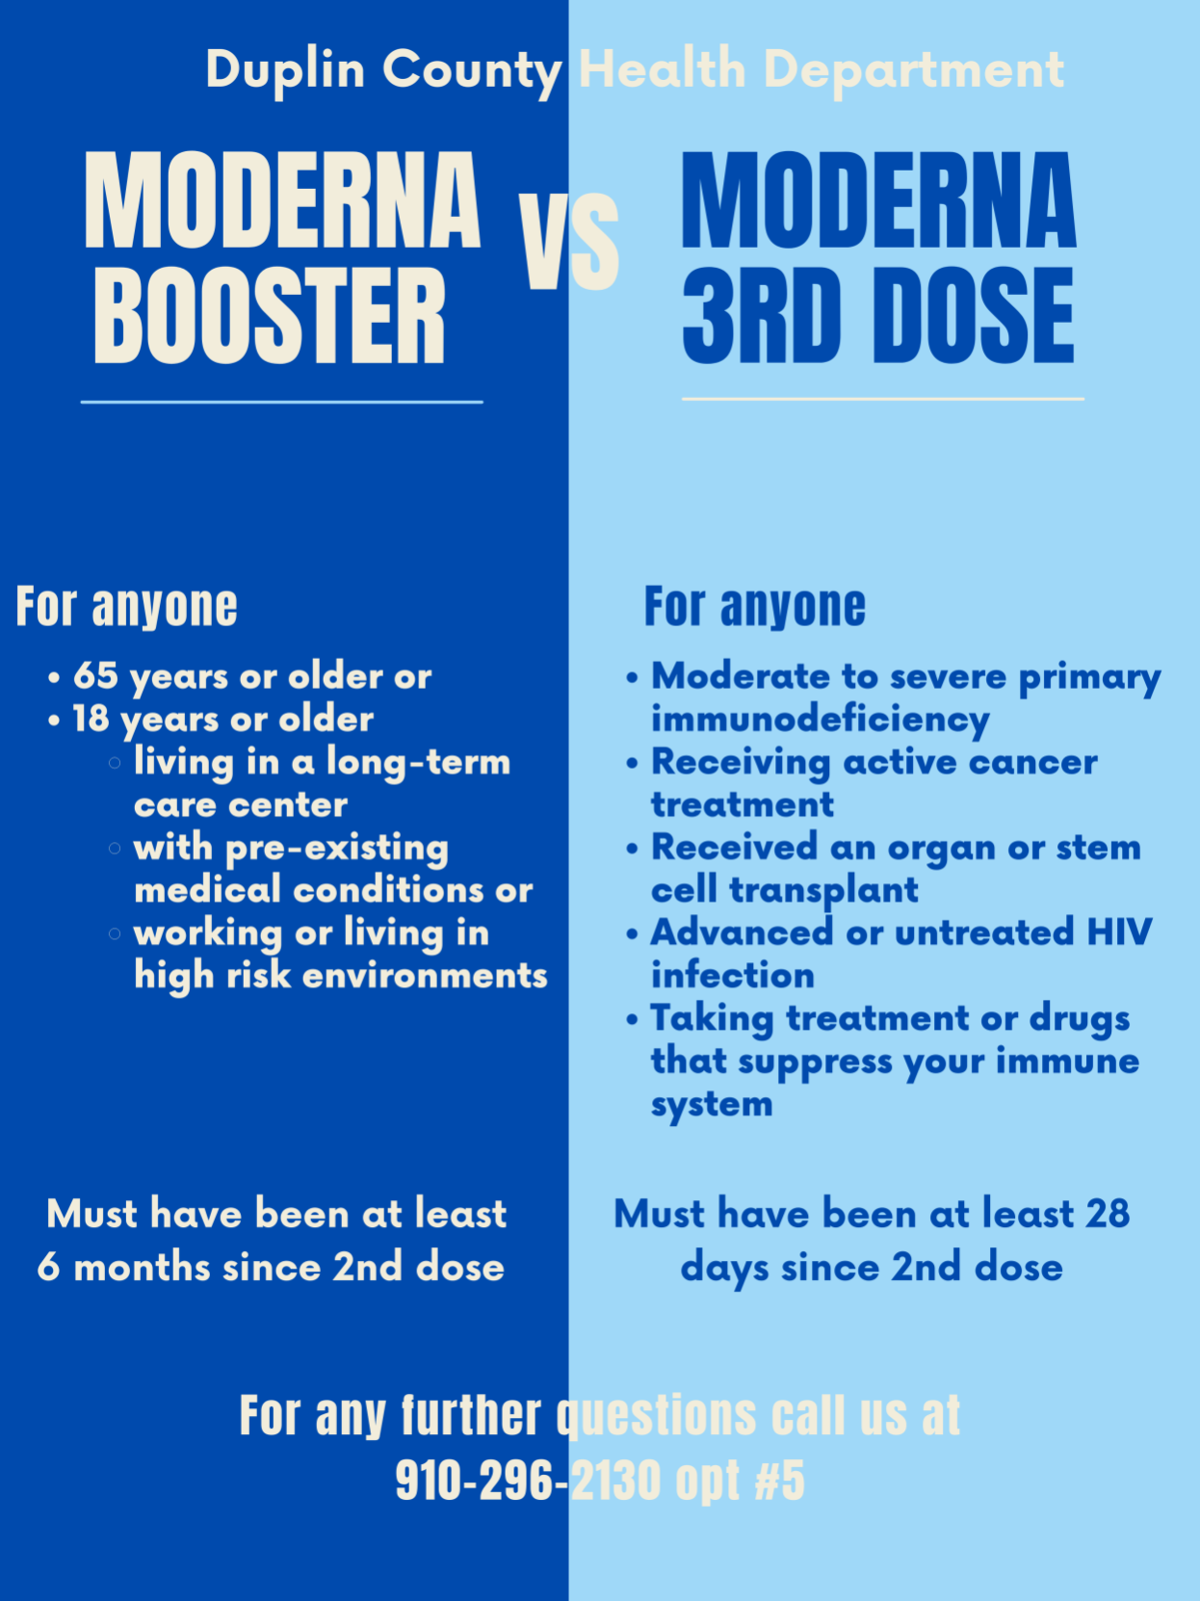 Booster vs 3rd Dose